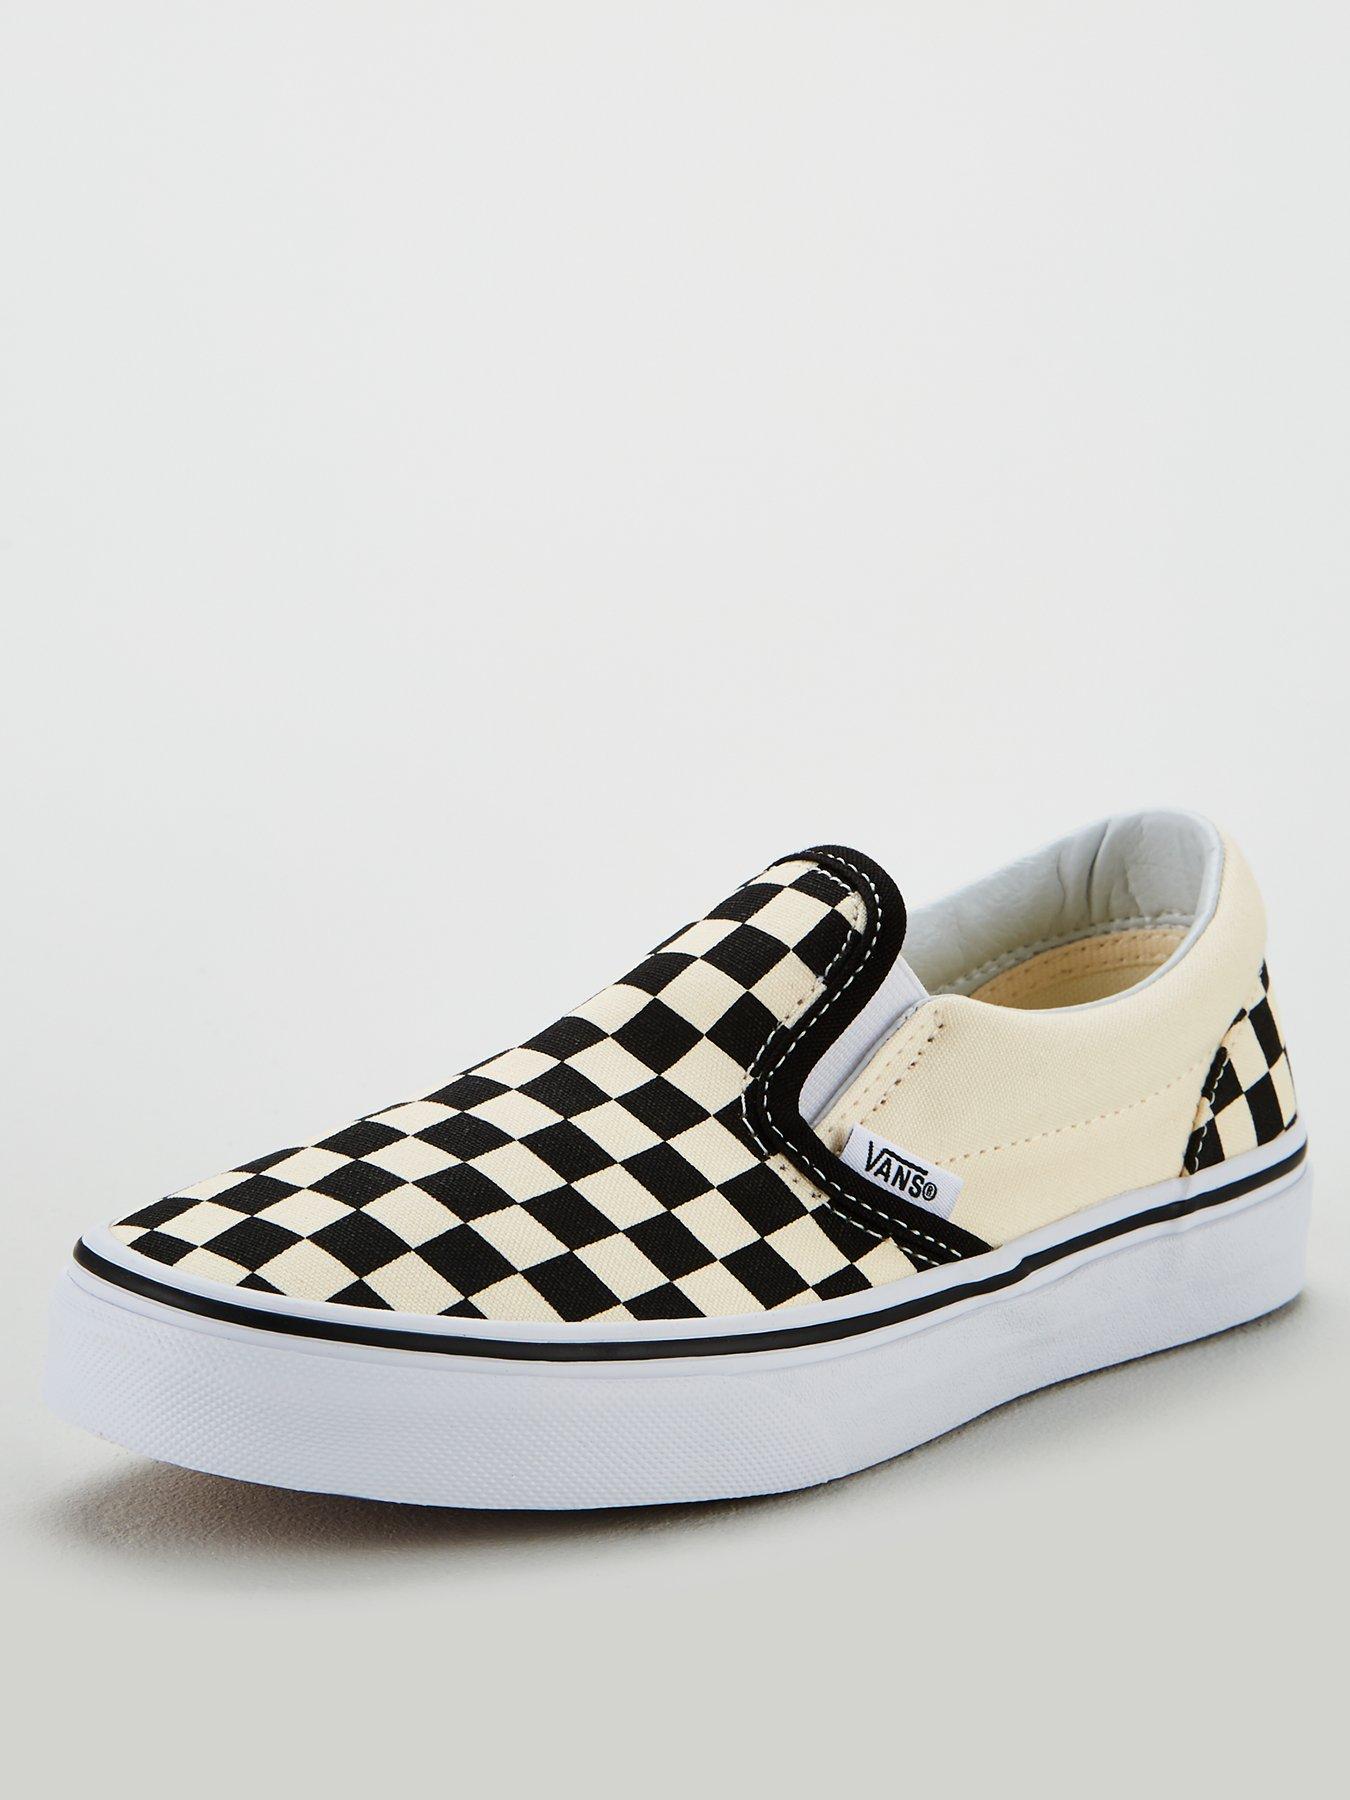 Vans Checkerboard Classic Slip-on Plimsolls - Black/White